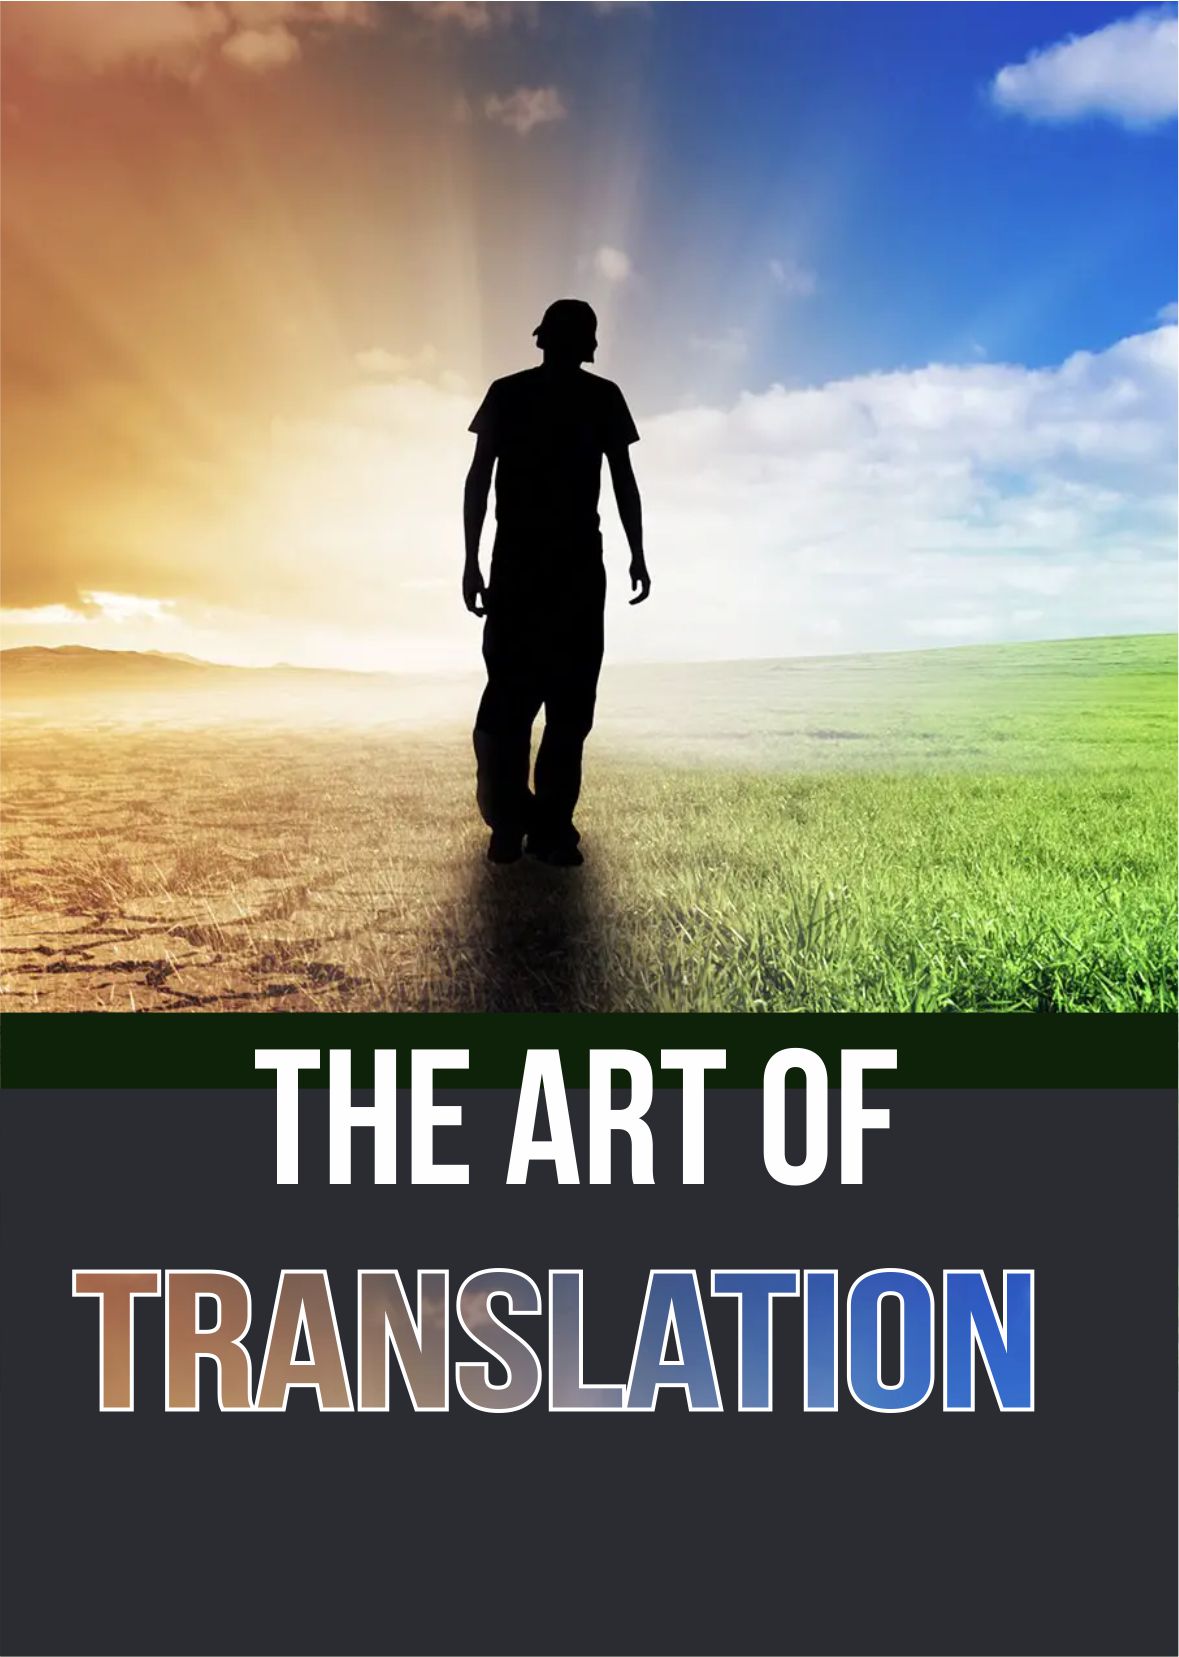 The art of translation